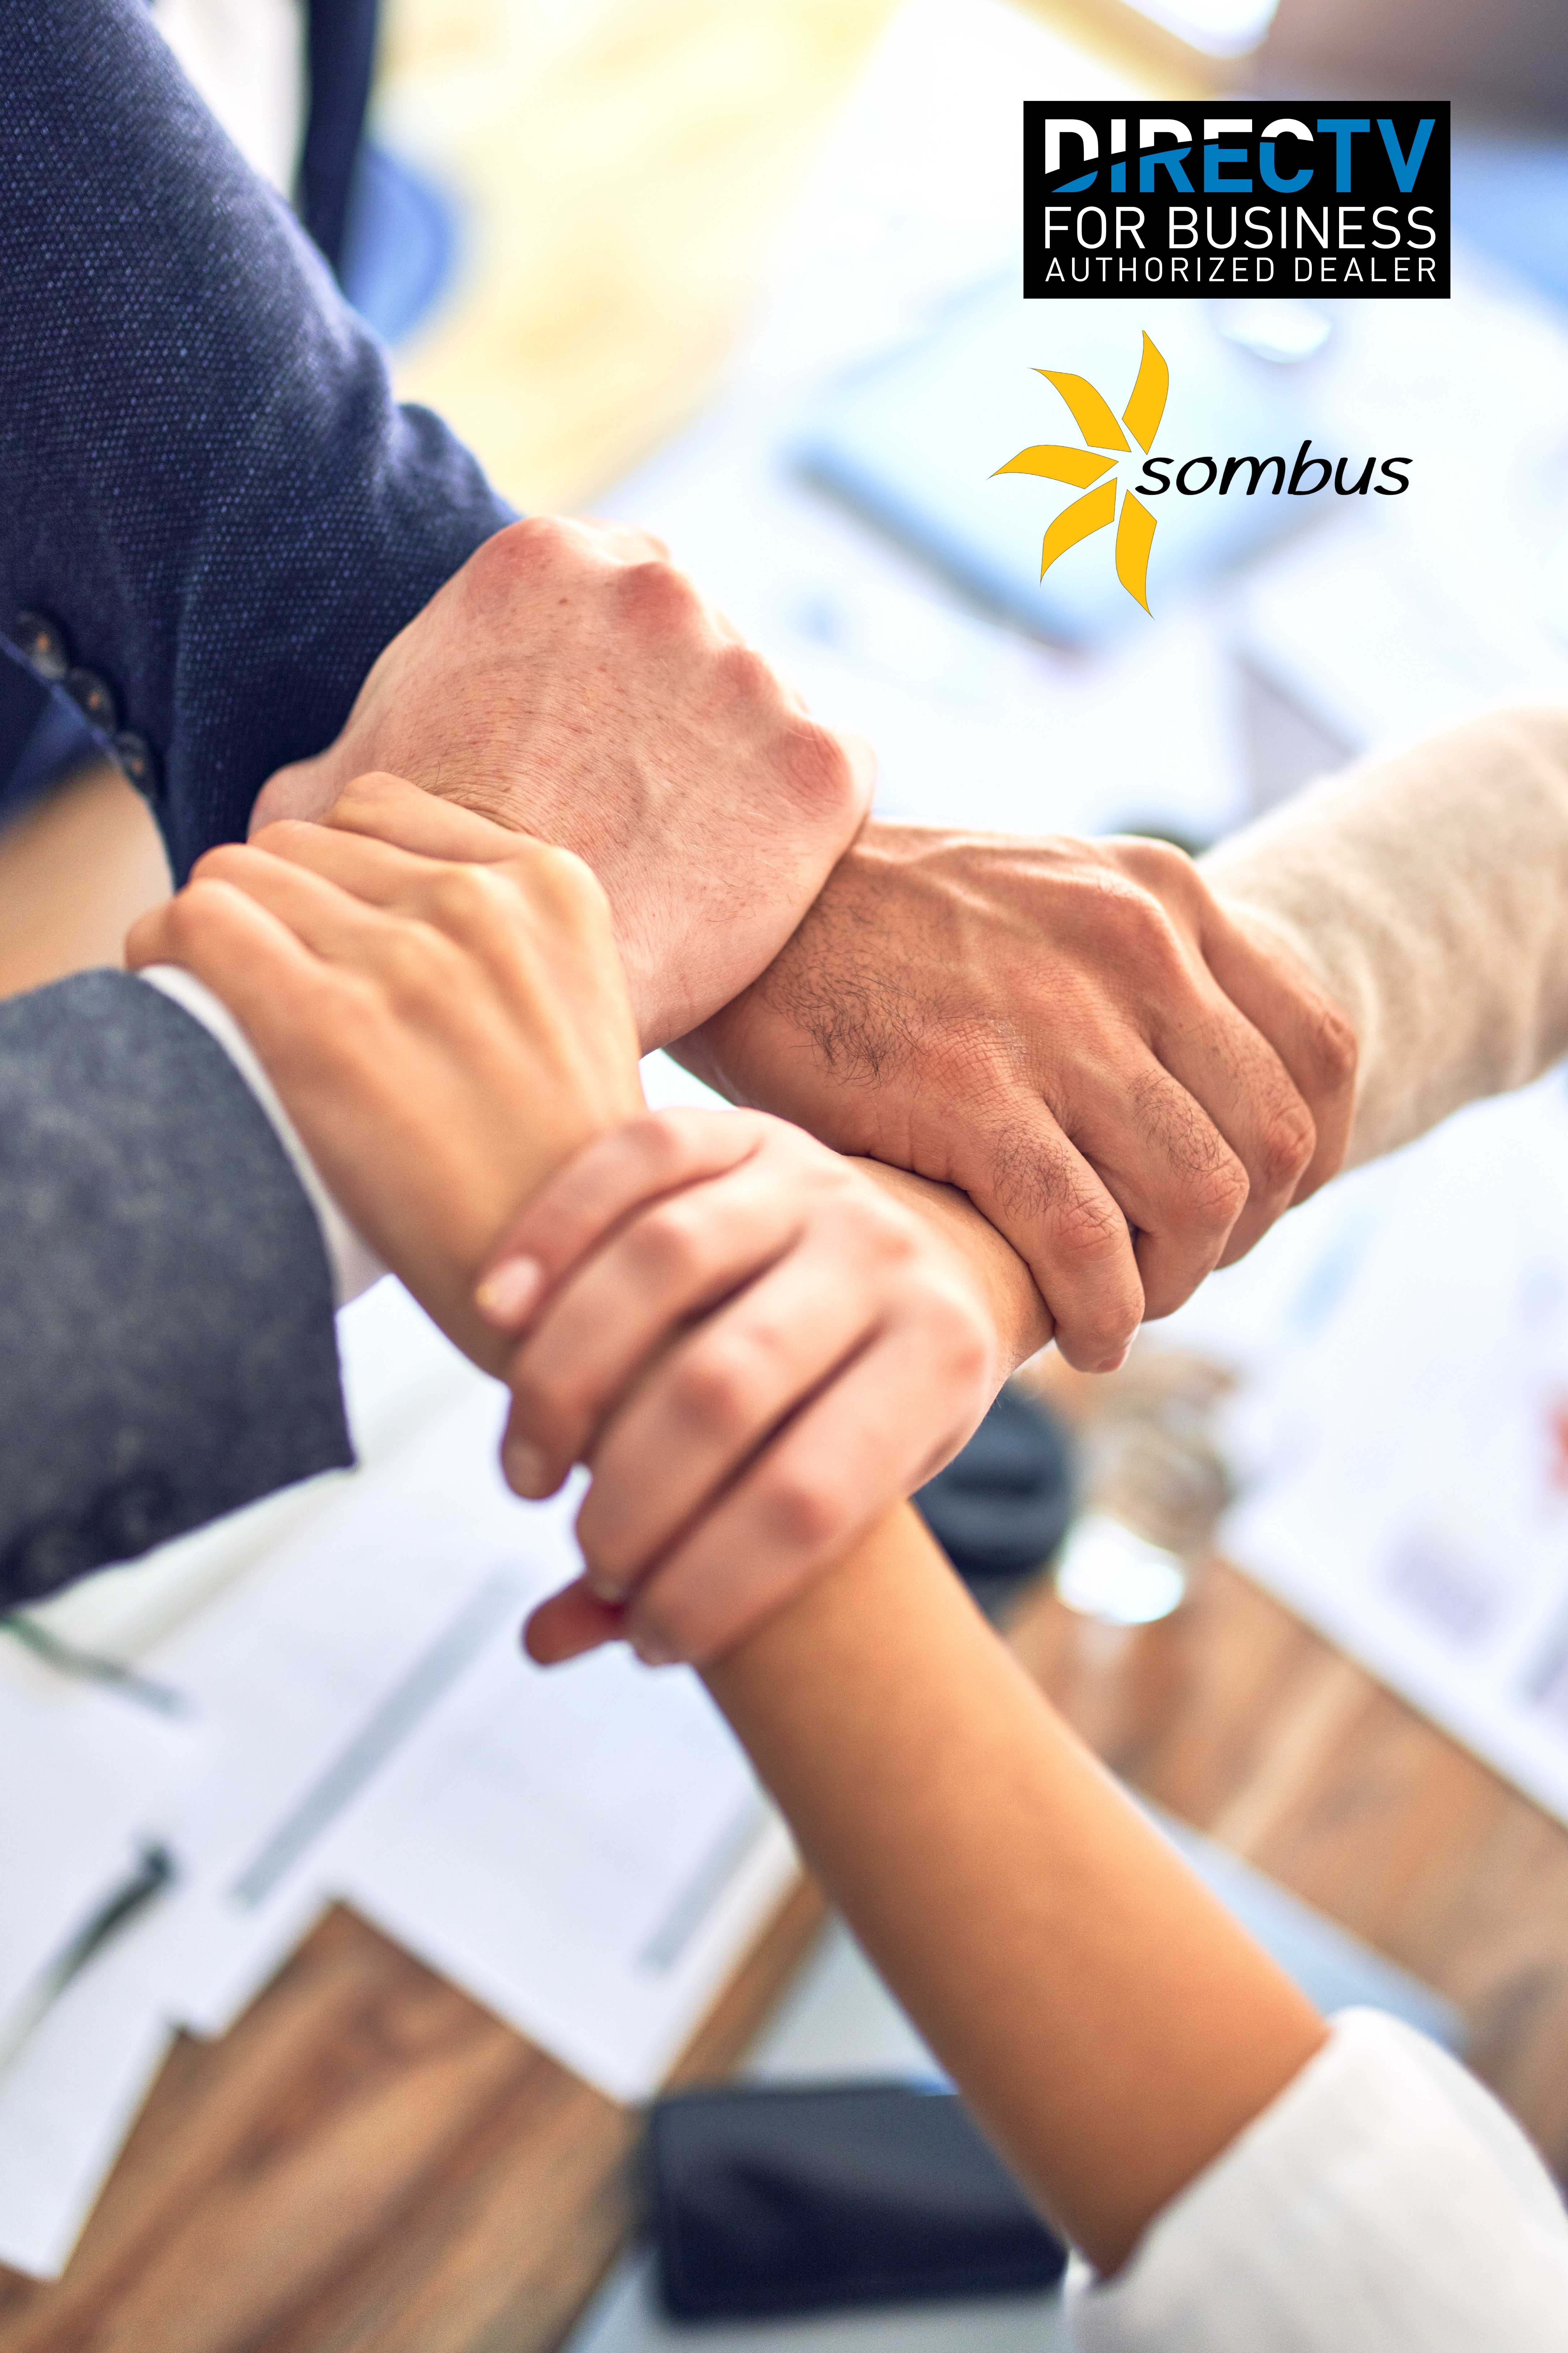 Sombus DIRECTV for Business Authorized Dealer